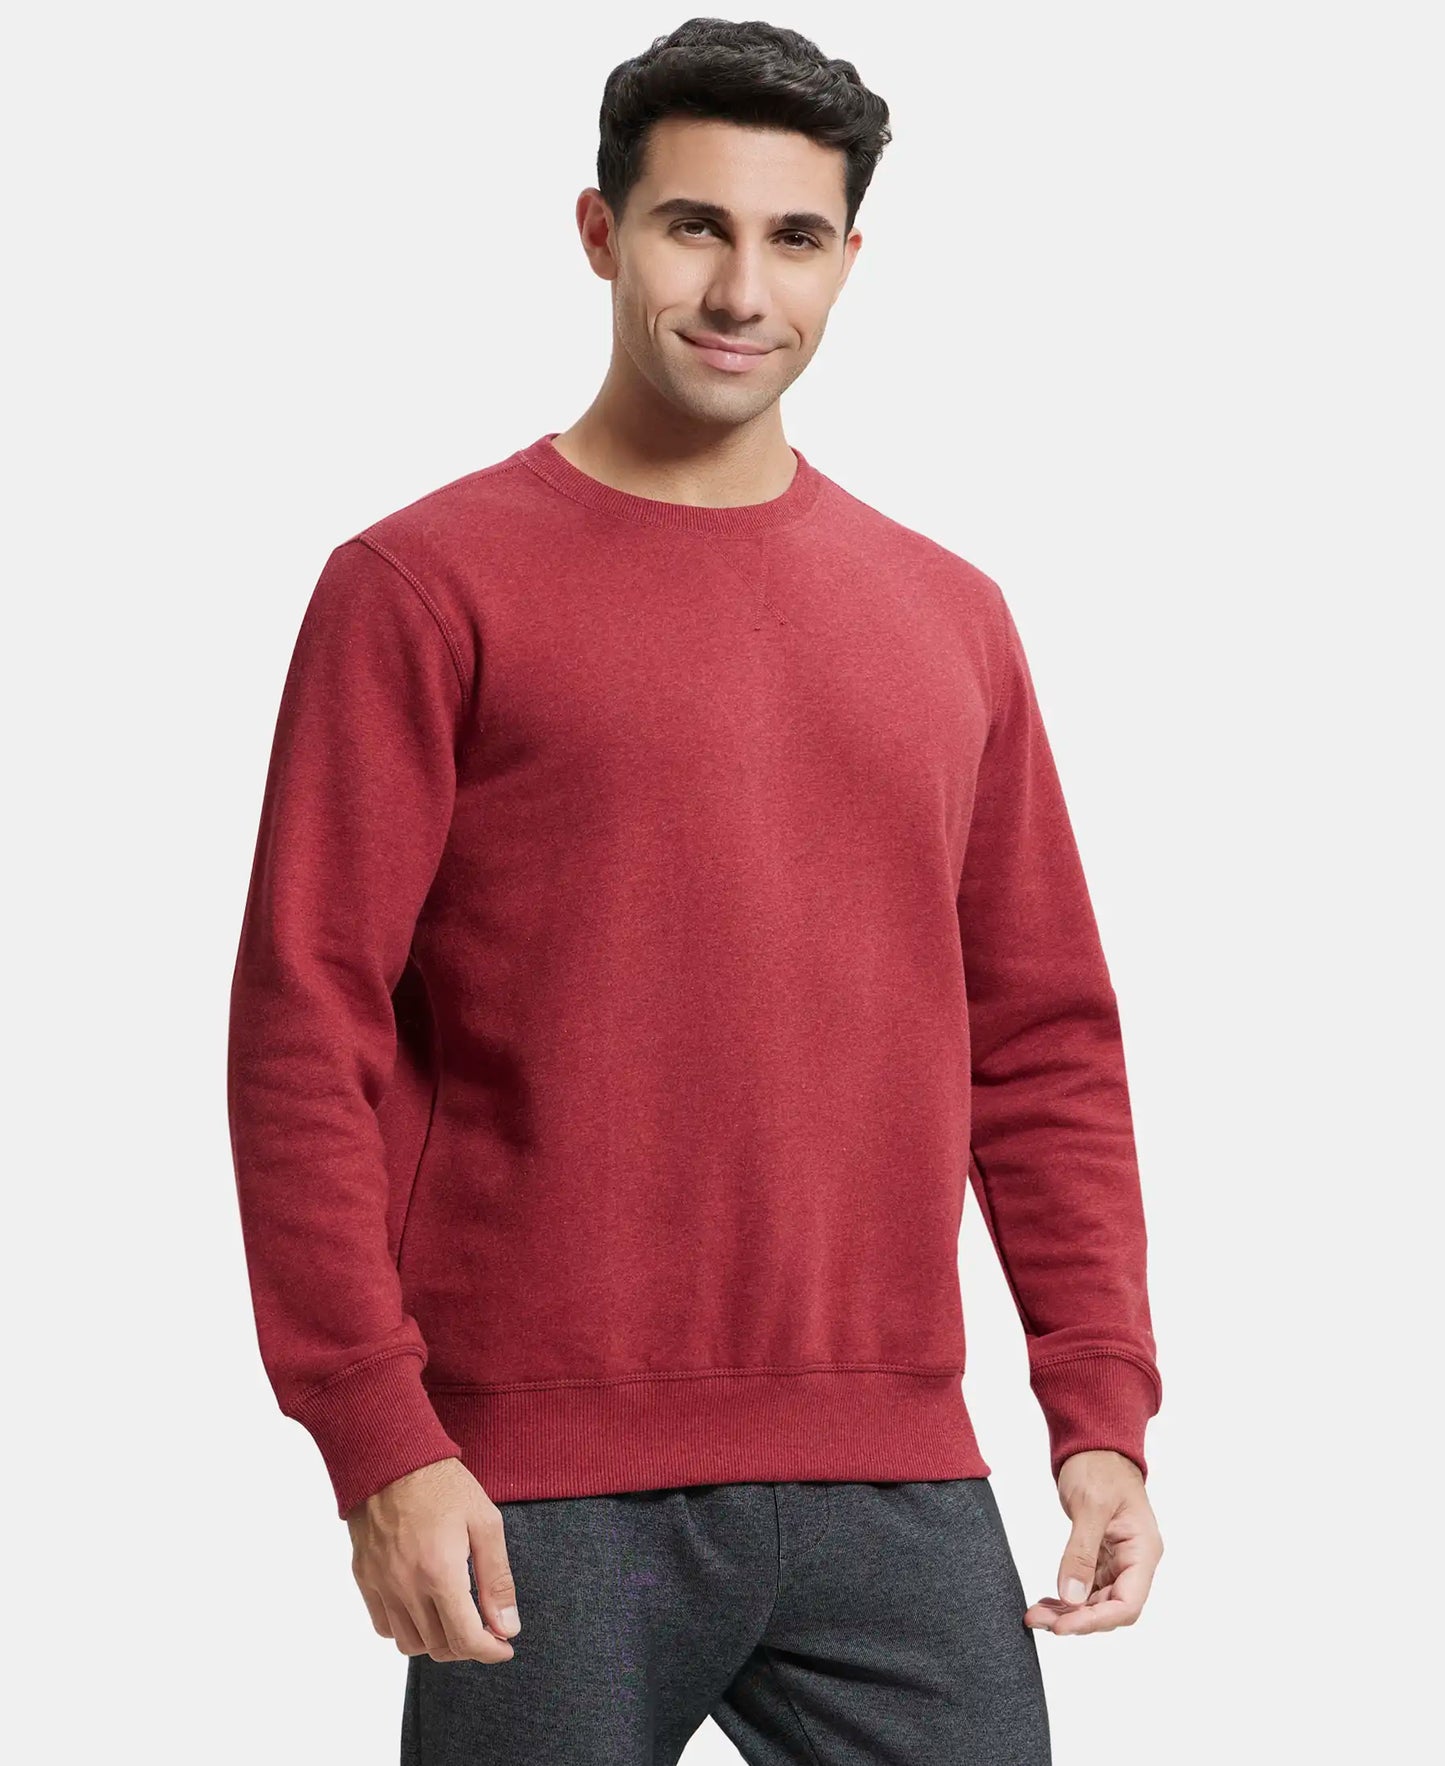 Super Combed Cotton Rich Fleece Sweatshirt with StayWarm Technology - Red Melange-2